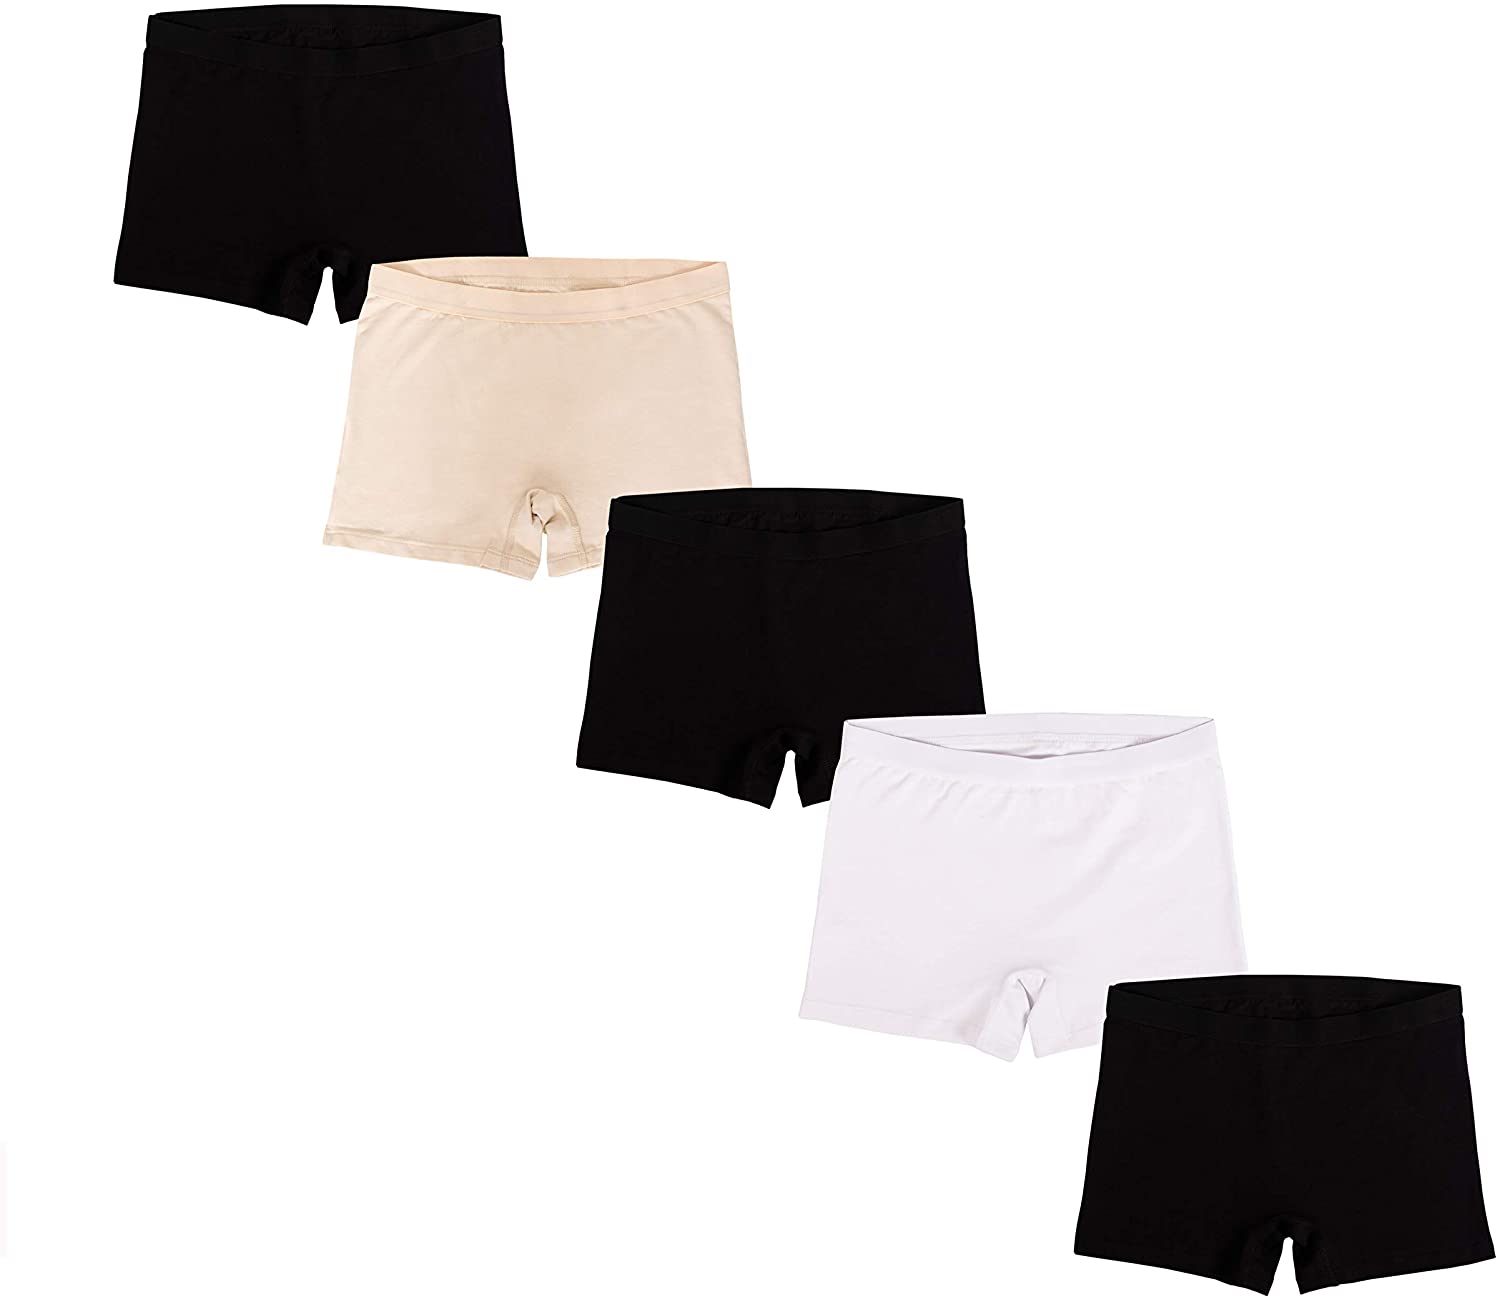 EVARI Women's Boyshort Panties Comfortable Cotton Underwear Pack of 5 in  Black color